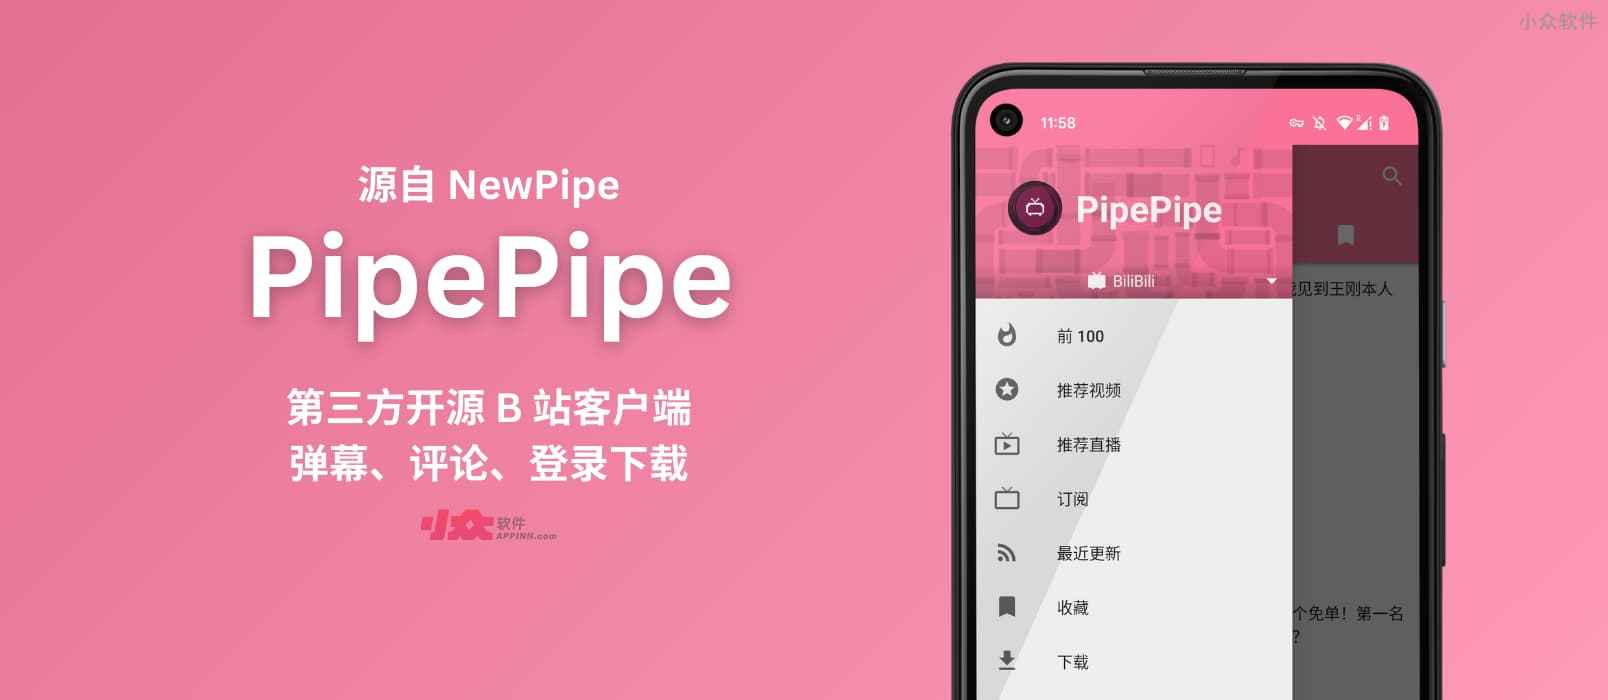 PipePipe - 第三方开源 B 站 Android 客户端，支持弹幕、评论、登录下载｜原自 NewPipe 1